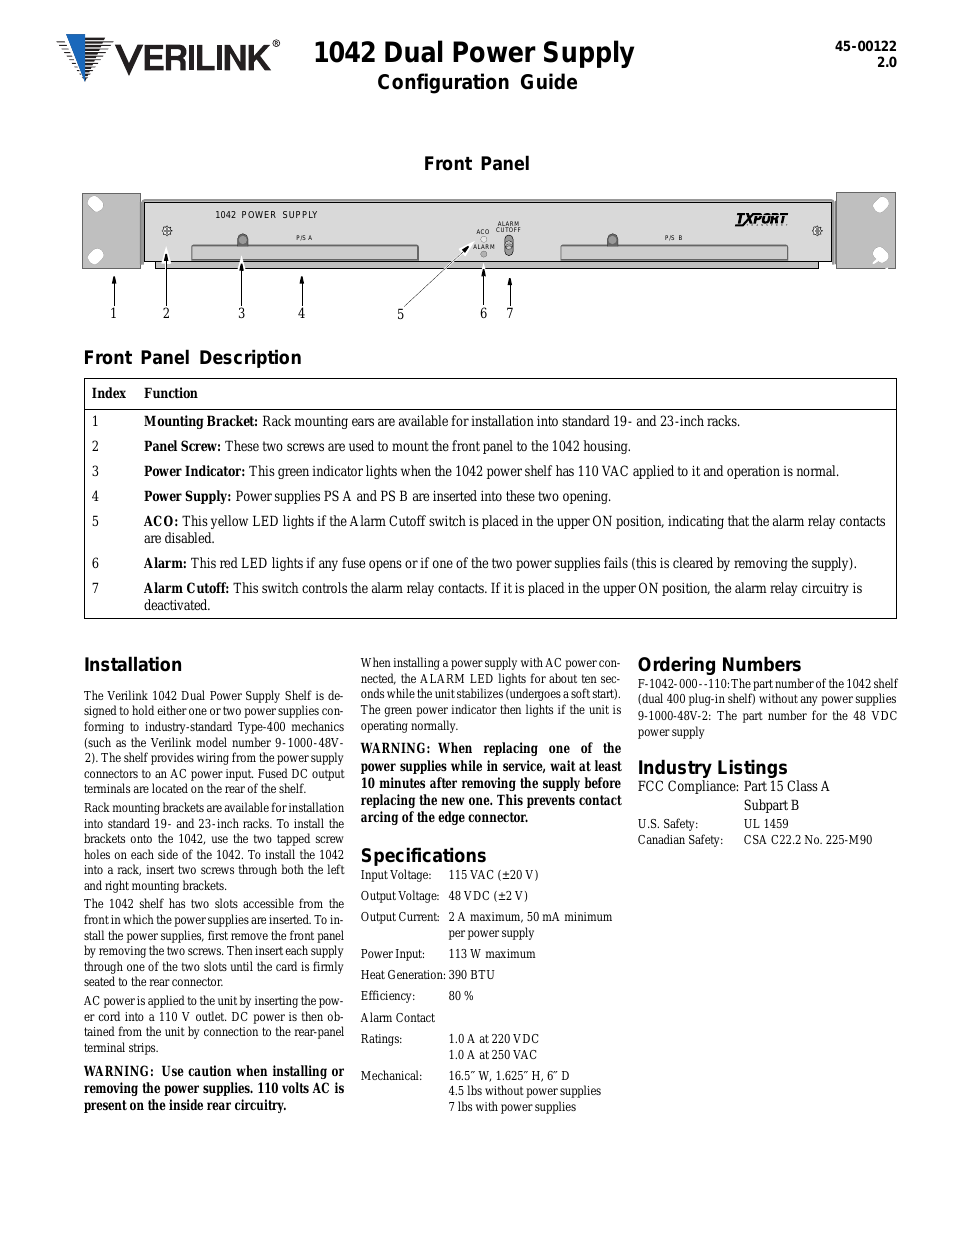 1042 (CG) Configuration/Installation Guide